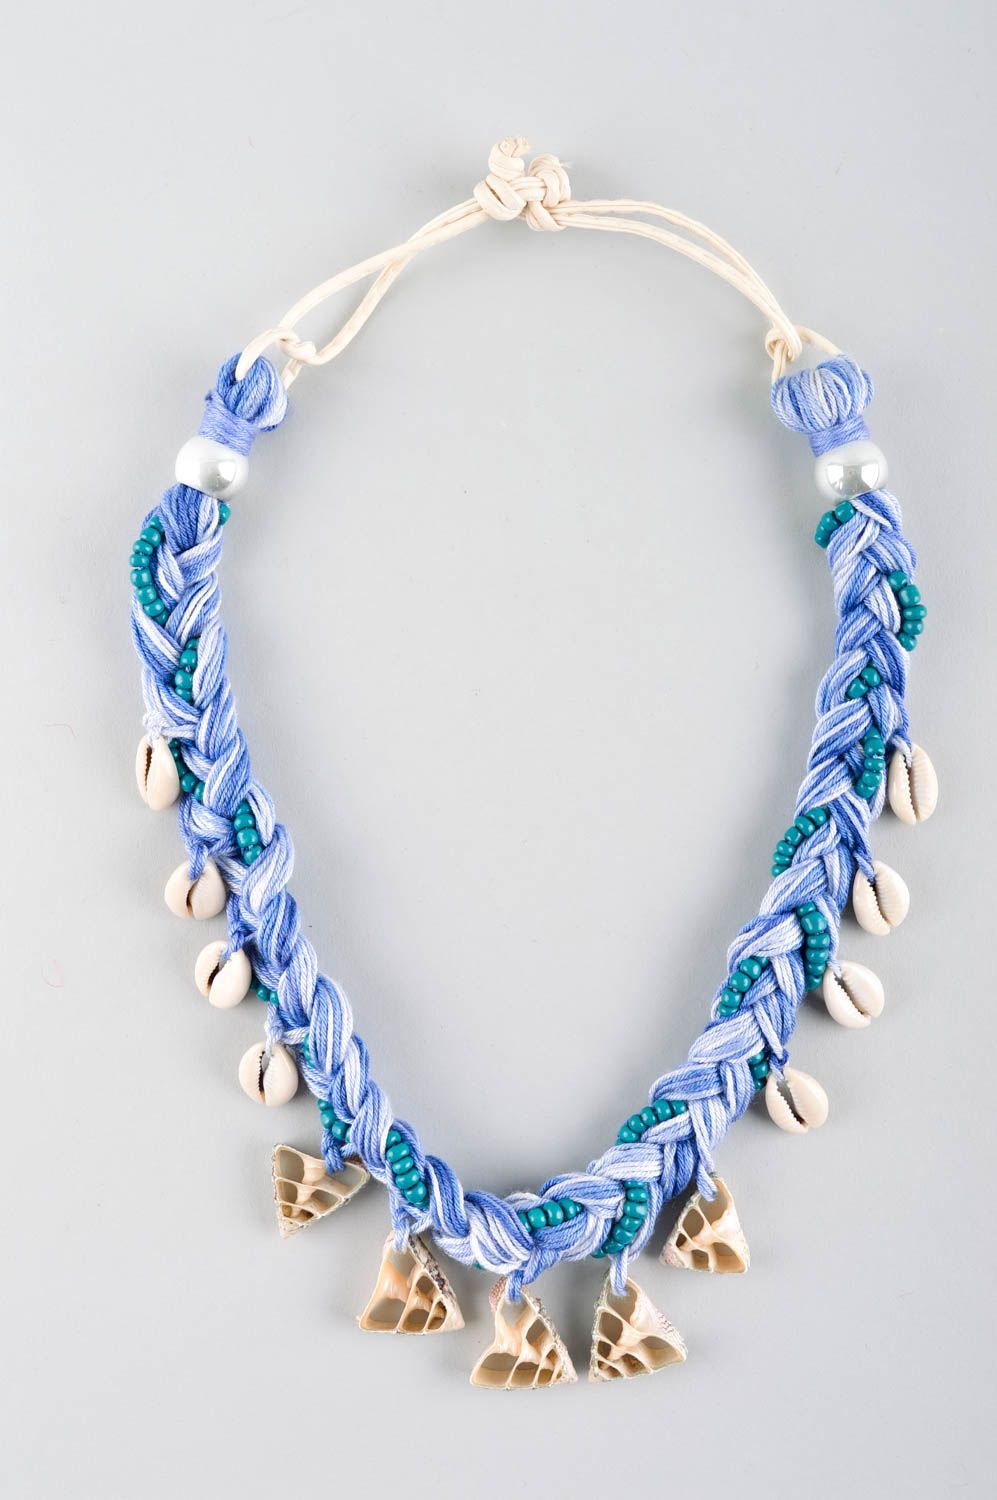 Handmade textile necklace beautiful jewellery ideas artisan jewelry designs photo 2